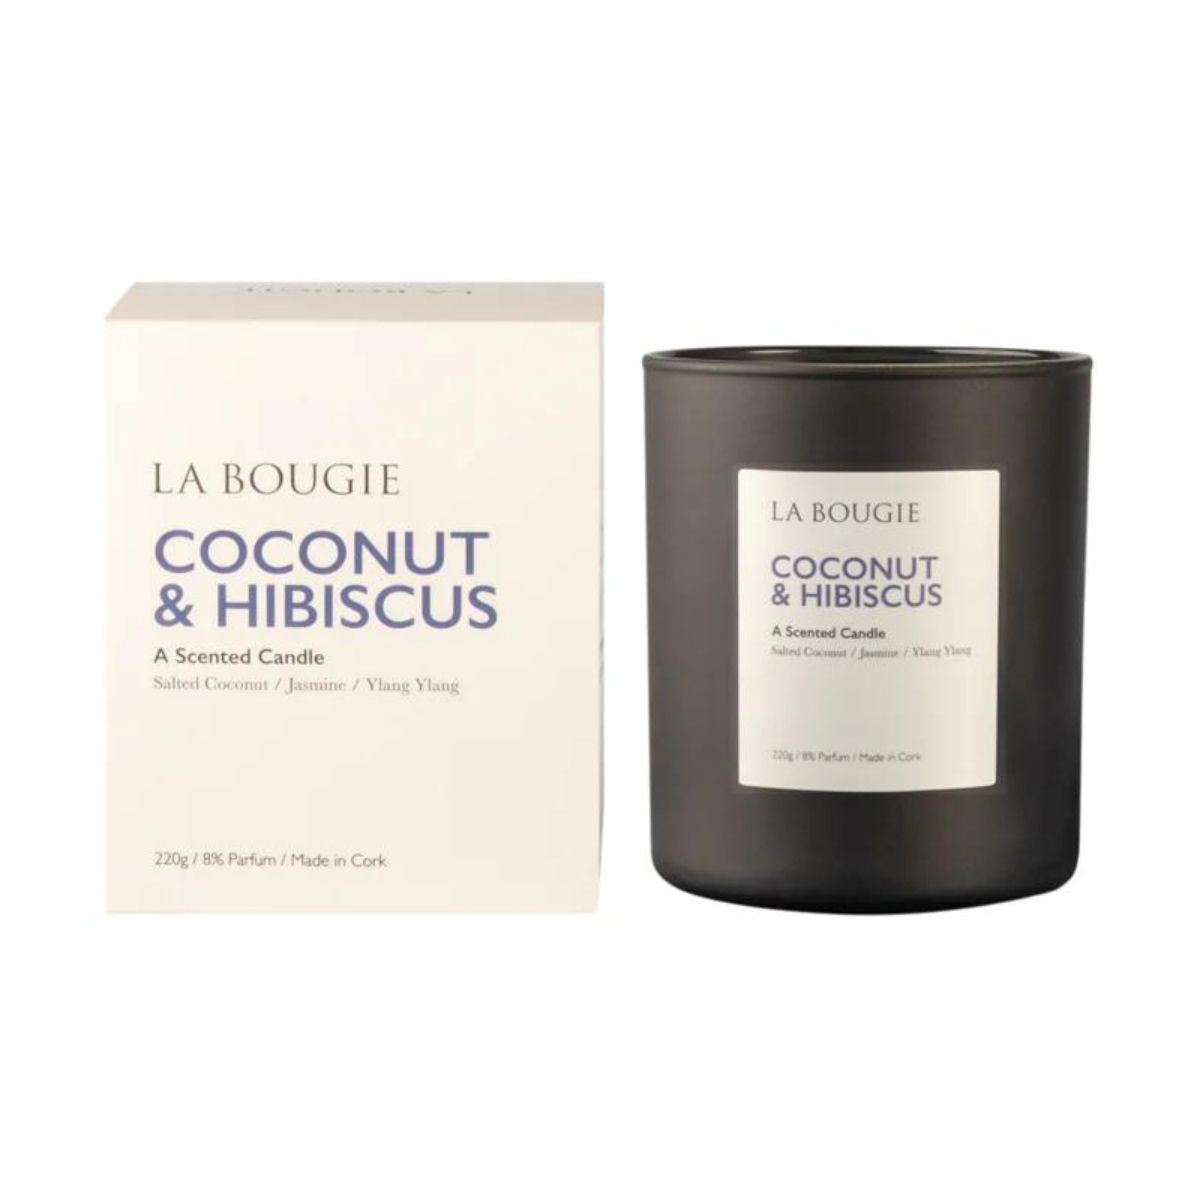 La Bougie Coconut & Hibiscus Candle